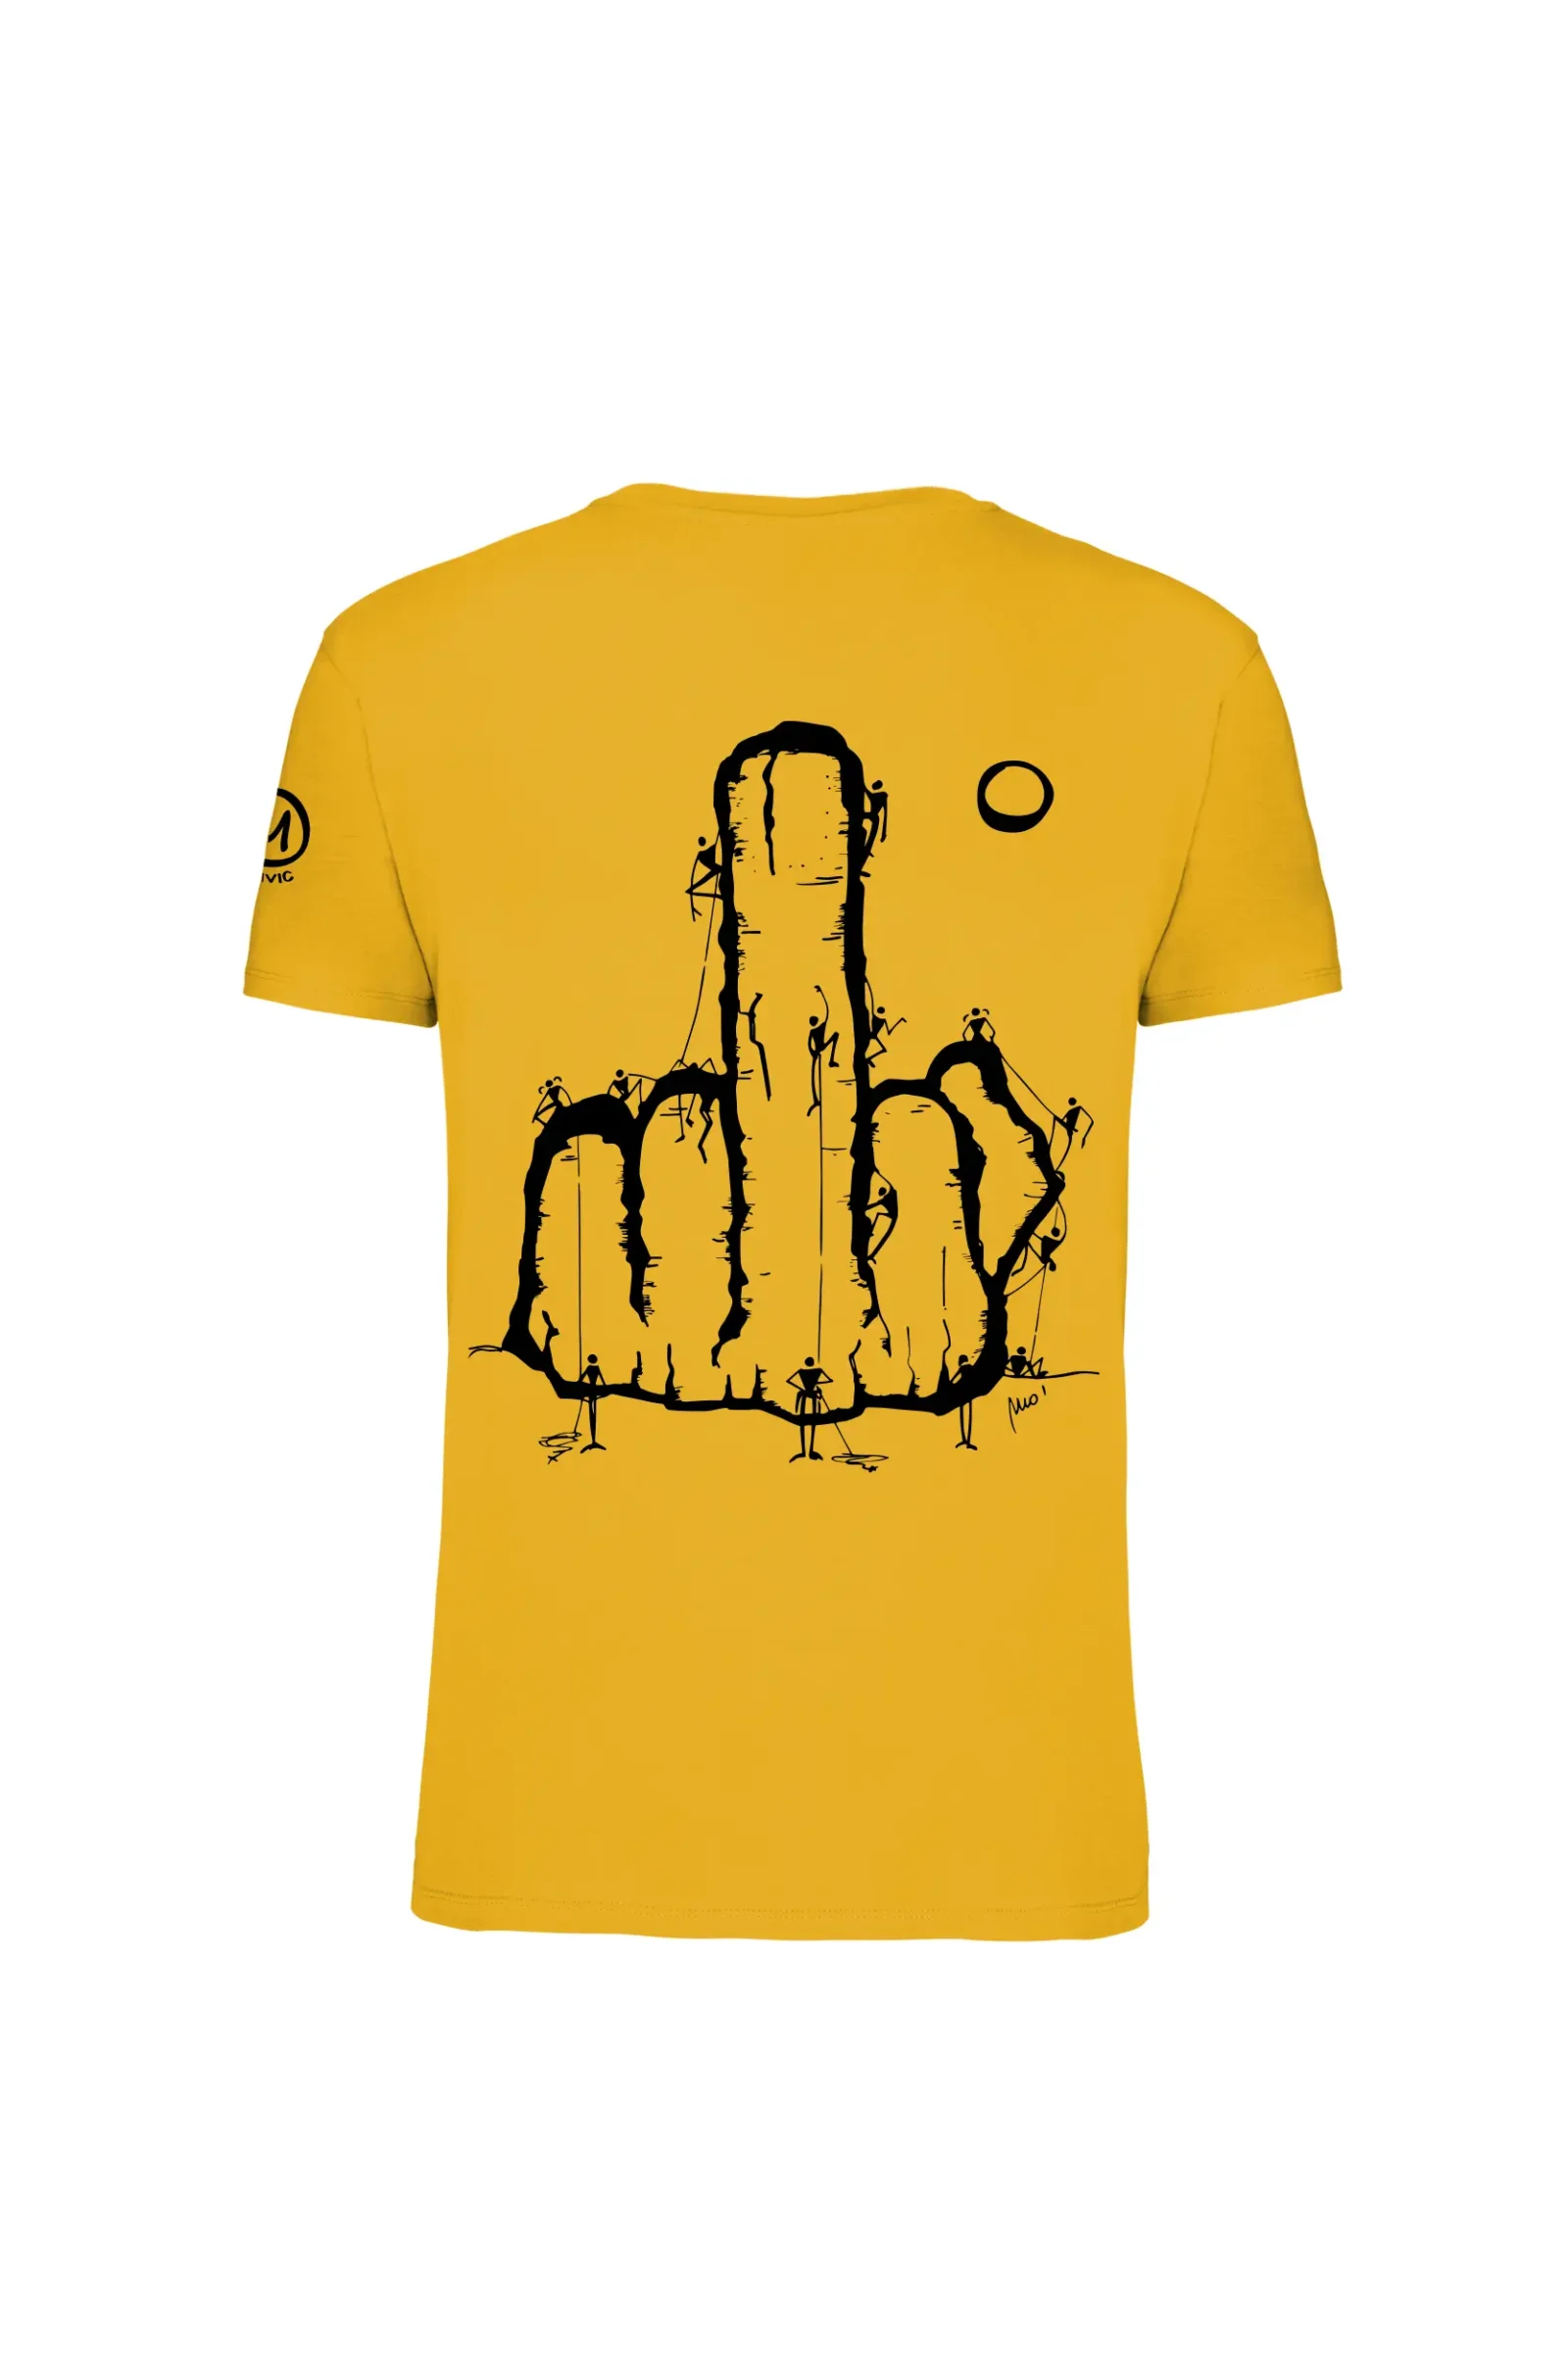 T-shirt d'escalade homme - coton jaune - graphisme "Fuck the System" - HASH MONVIC